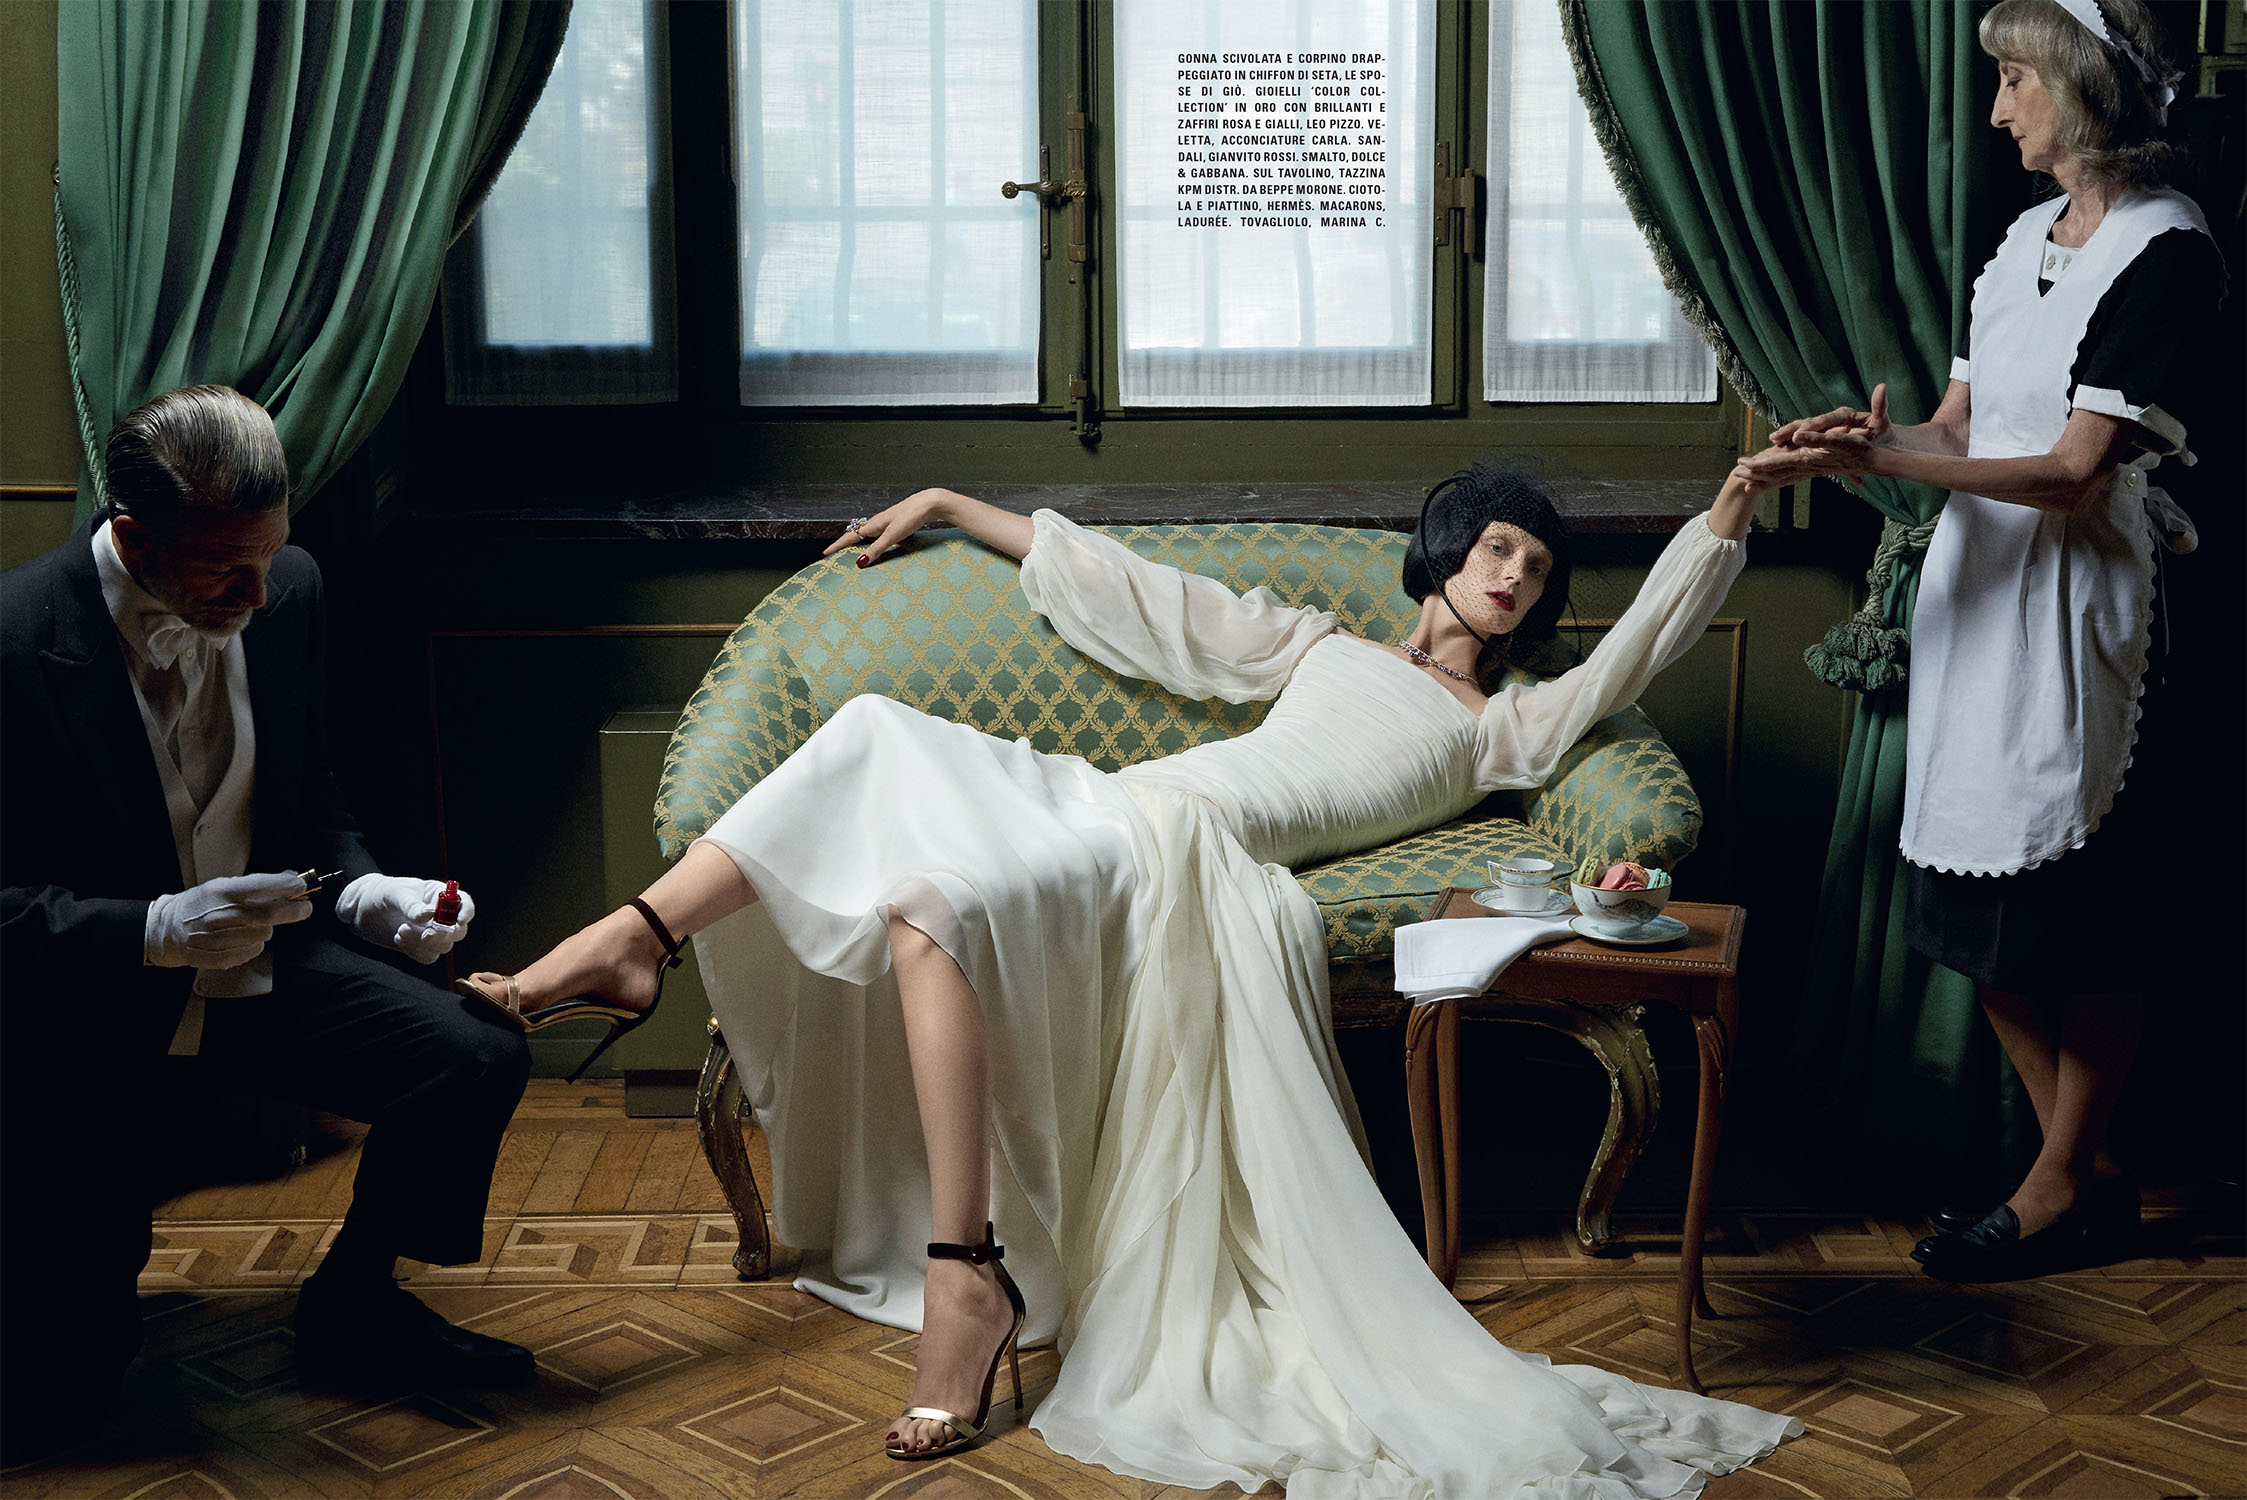 Vogue Sposa September 2016 “Dressing Up” | Greg Lotus | Vogue Italia | Numerique Retouch Photo Retouching Studio